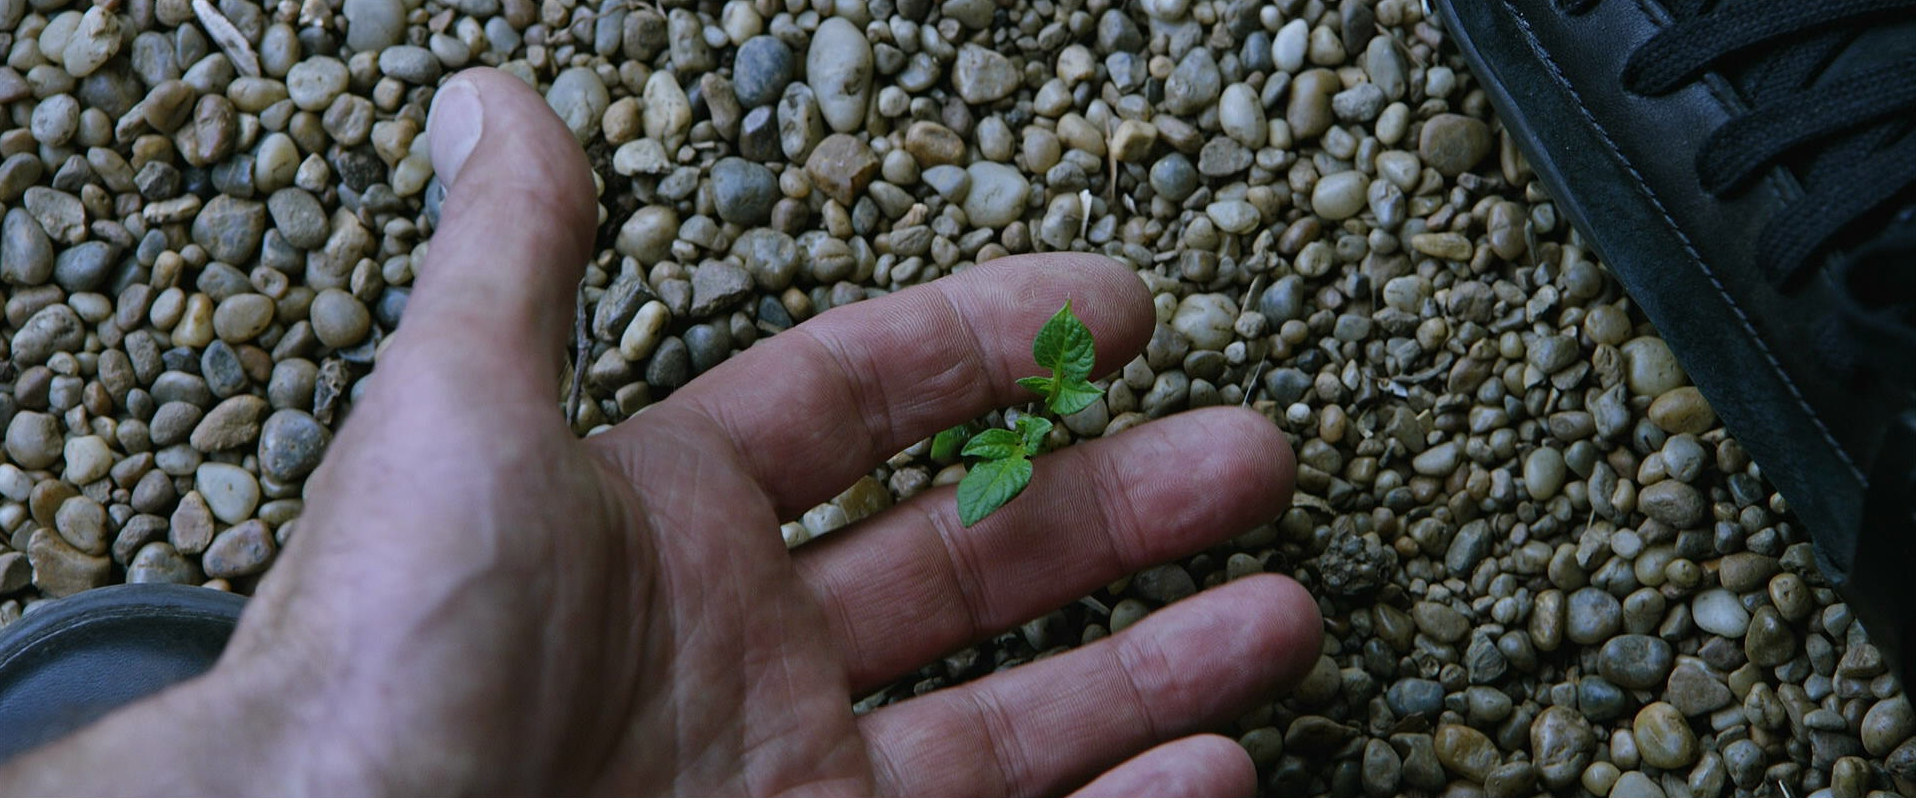 The Martian - Ridley Scott - Matt Damon - Mark Watney - plant shoot - Earth - gravel - hand